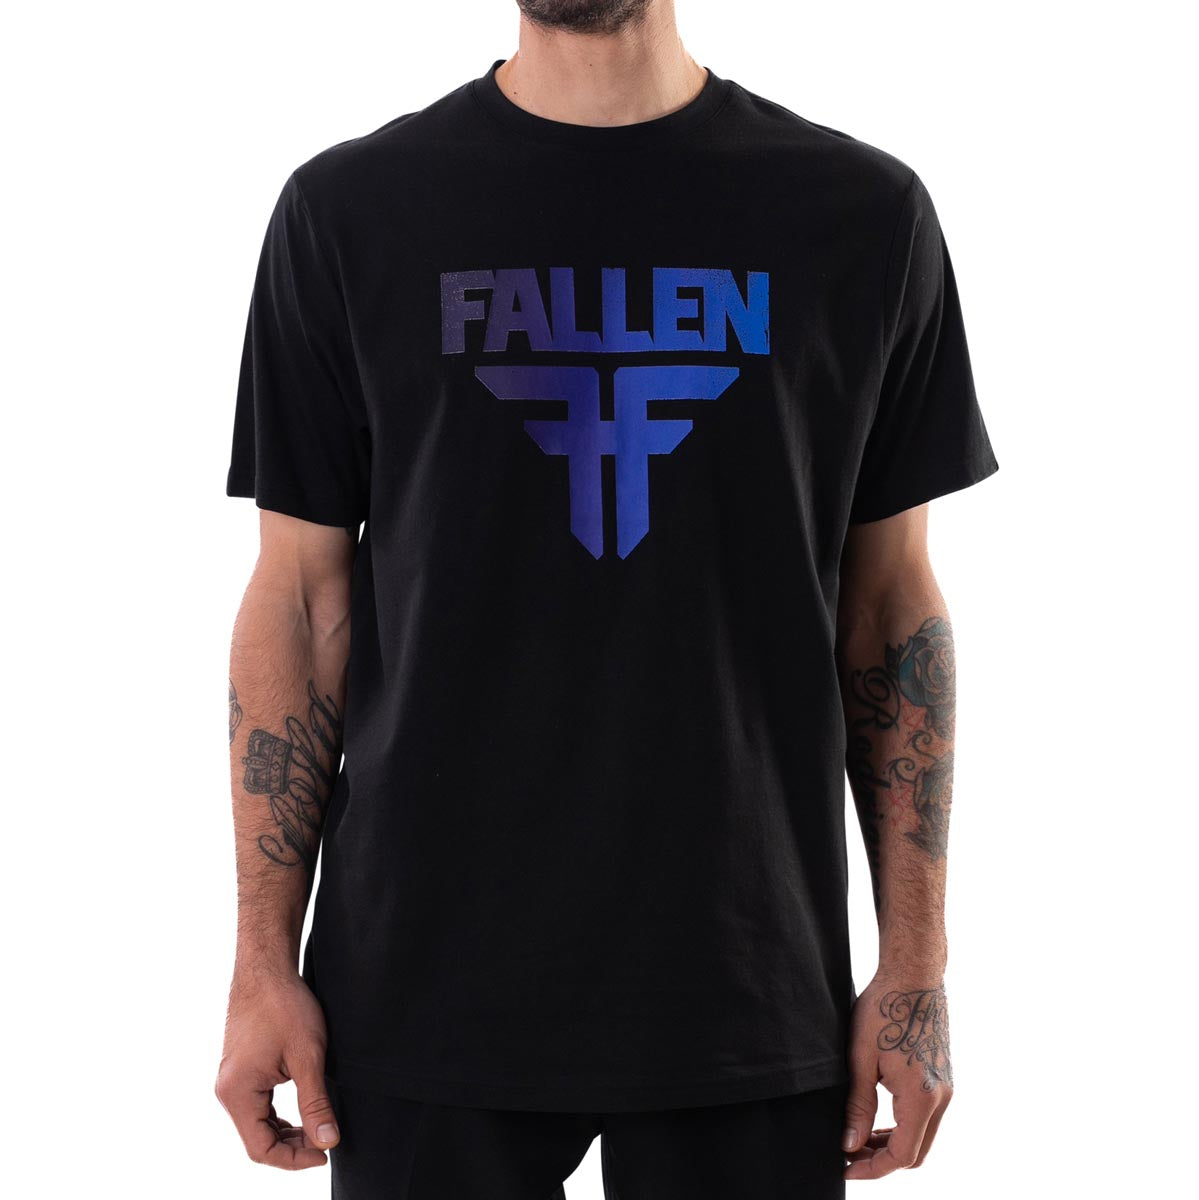 Fallen Insignia T-Shirt - Black/Purple image 2